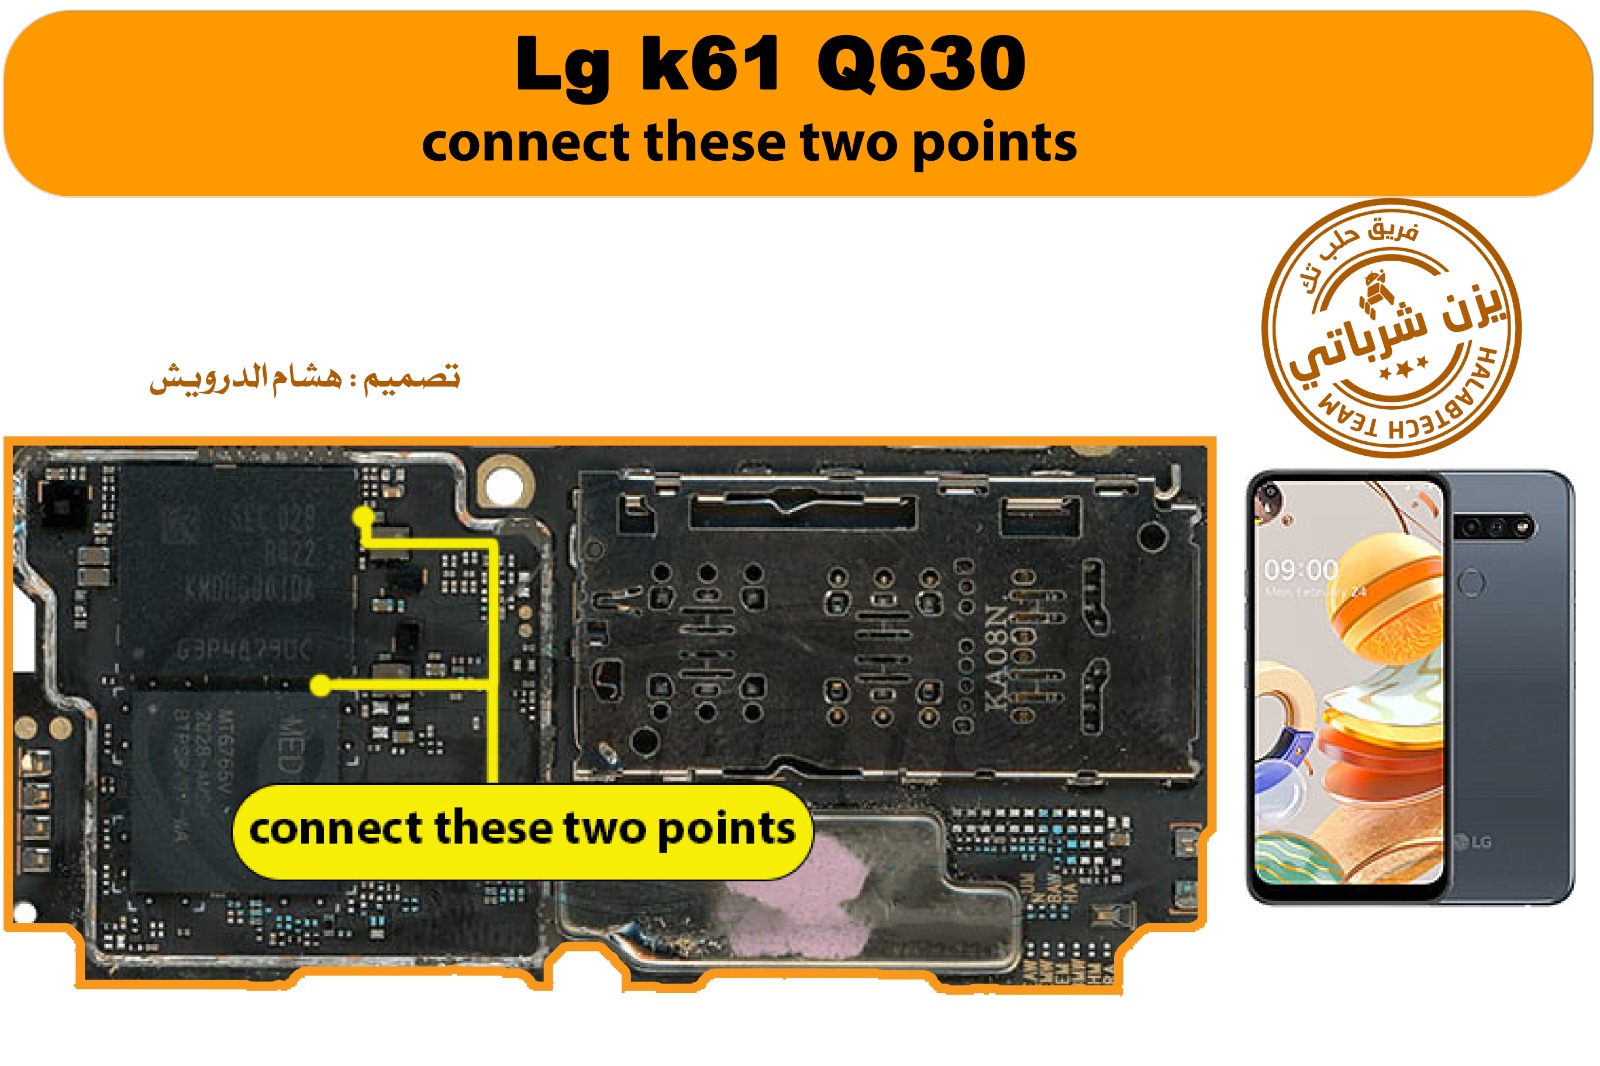 LG K61 testpoint edl point